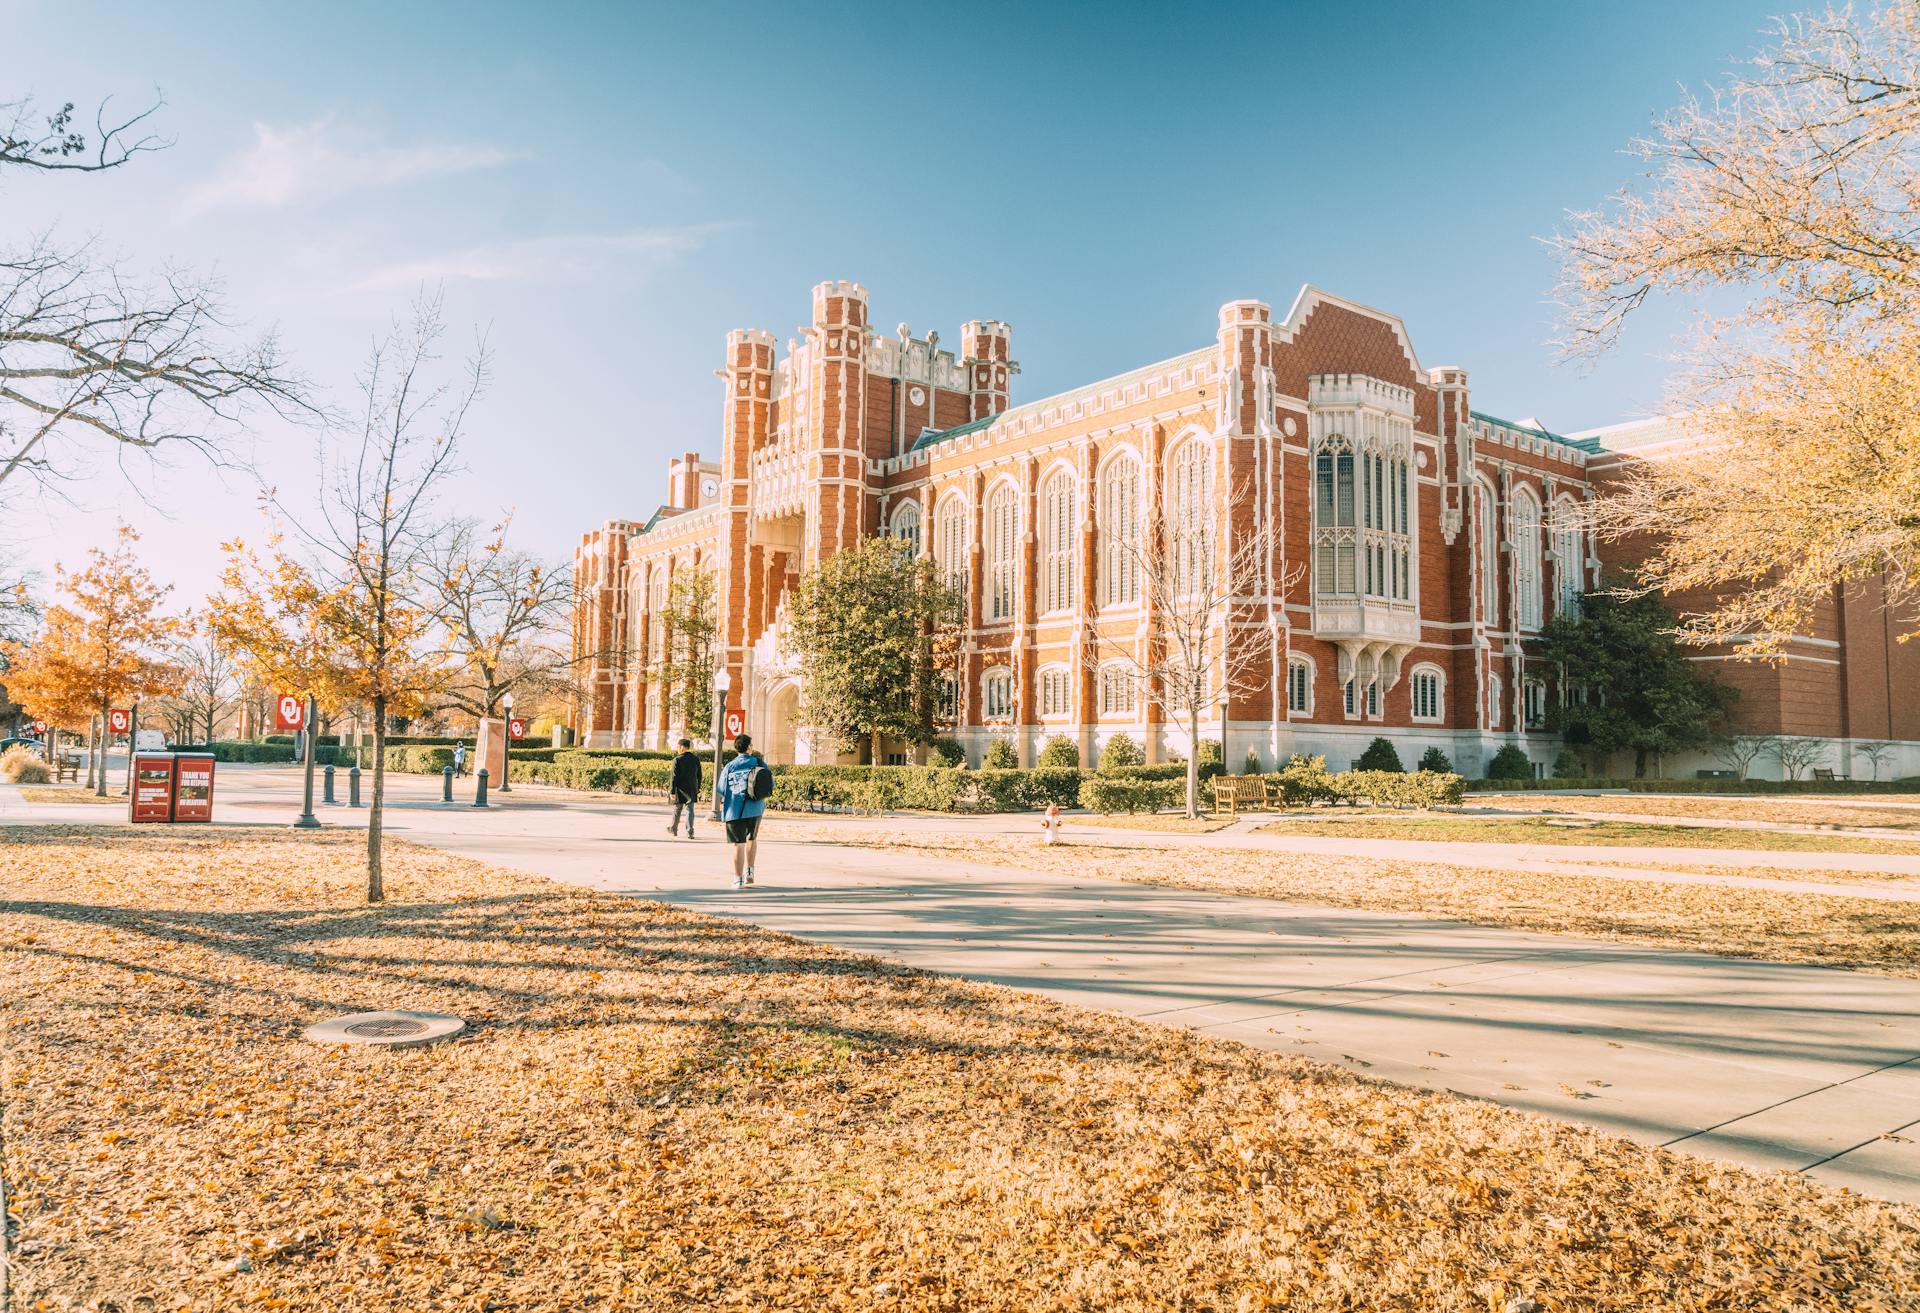 A university campus in autumn | Source: Pexels